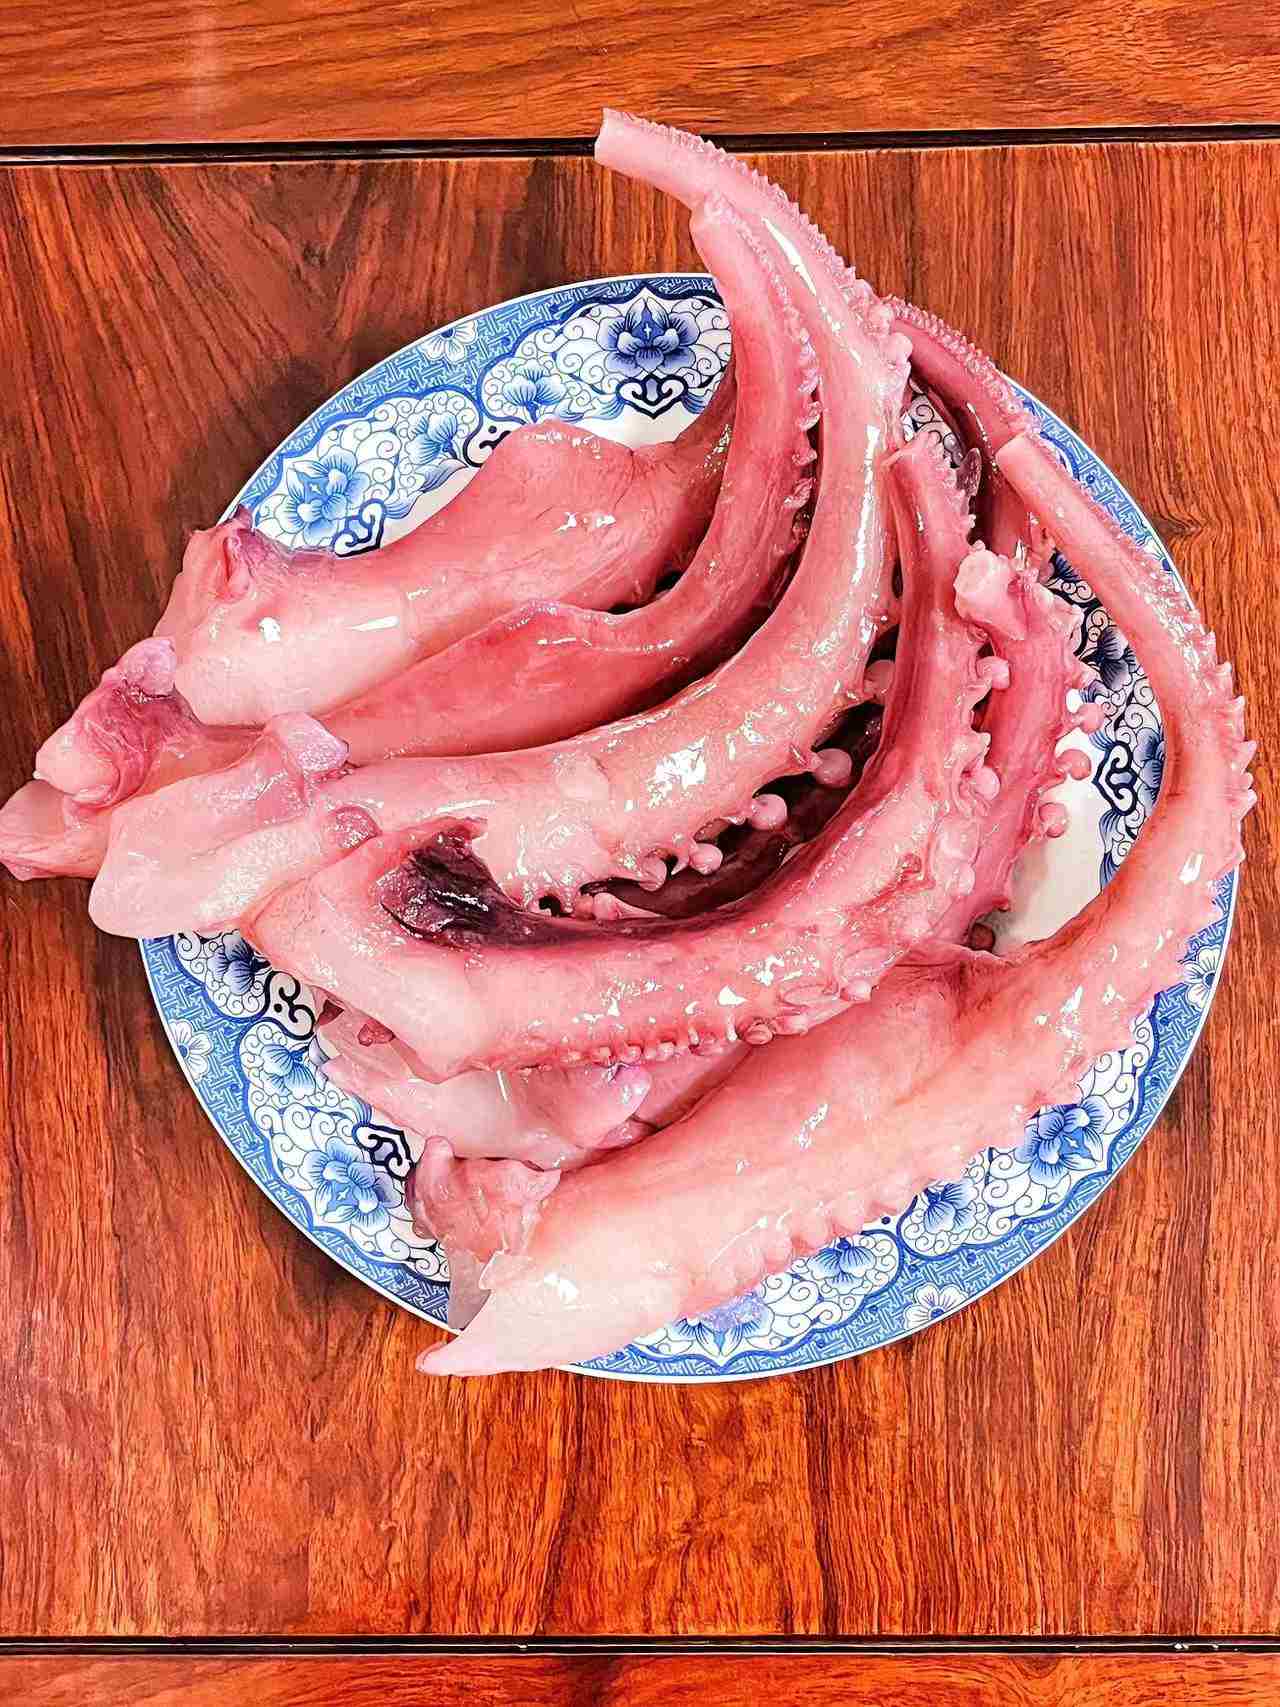 squid tentacle segments